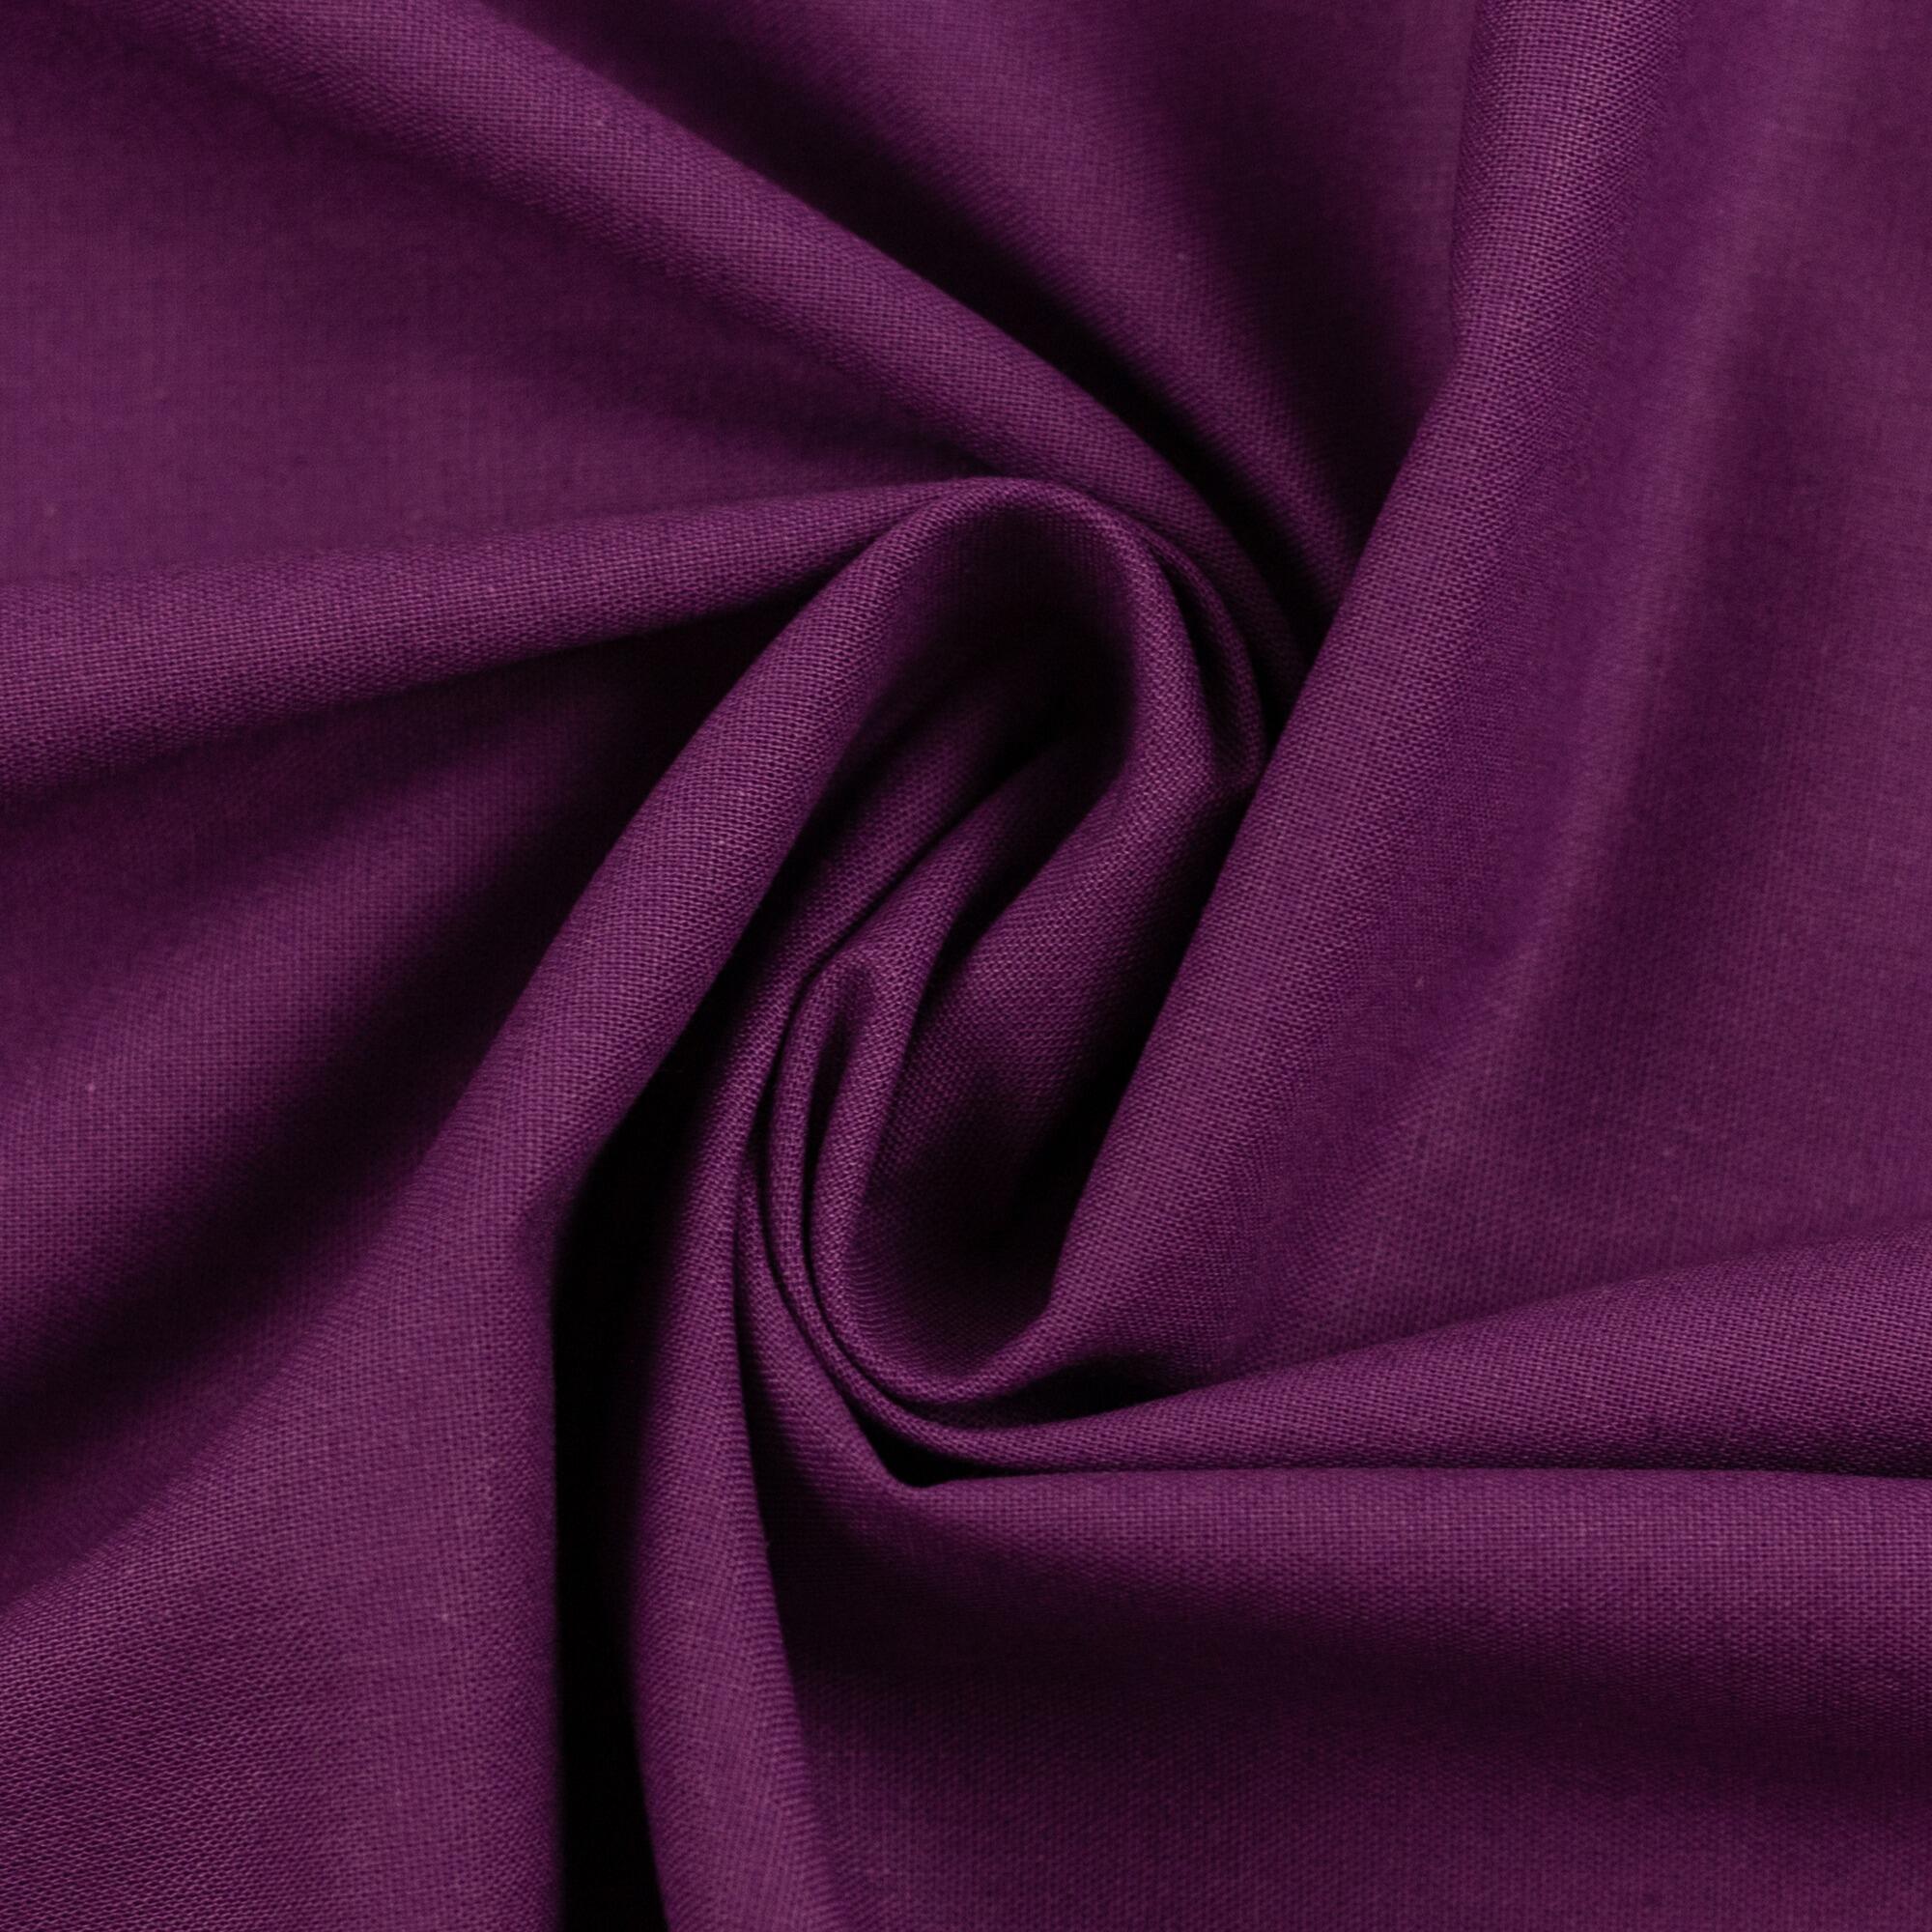 Dark purple cotton plain fabric